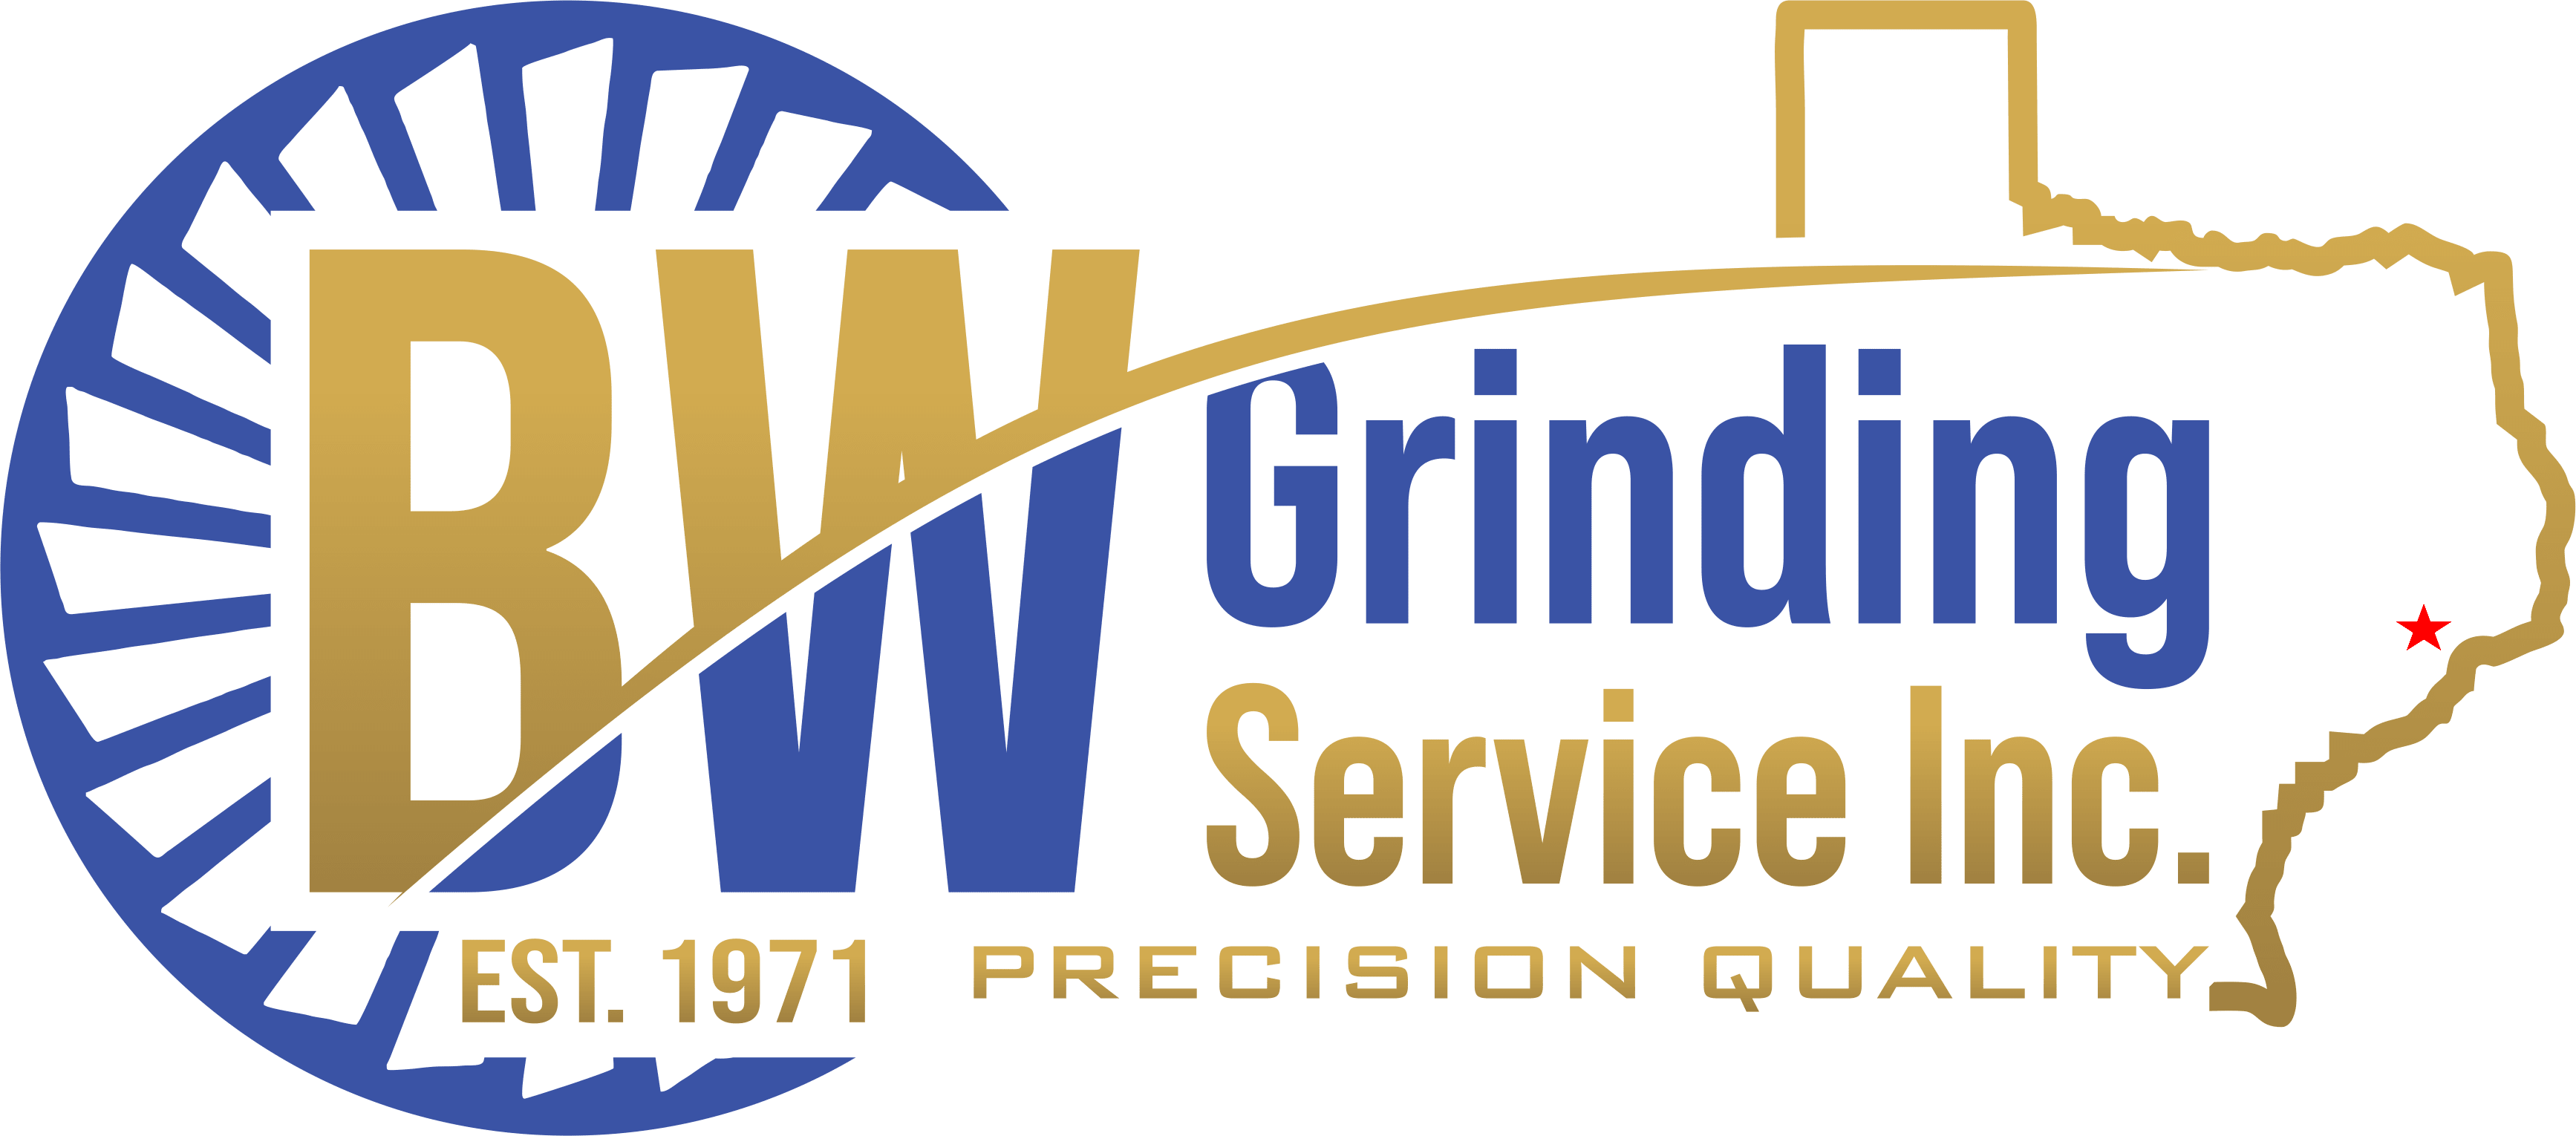 BW Grinding Service Inc.